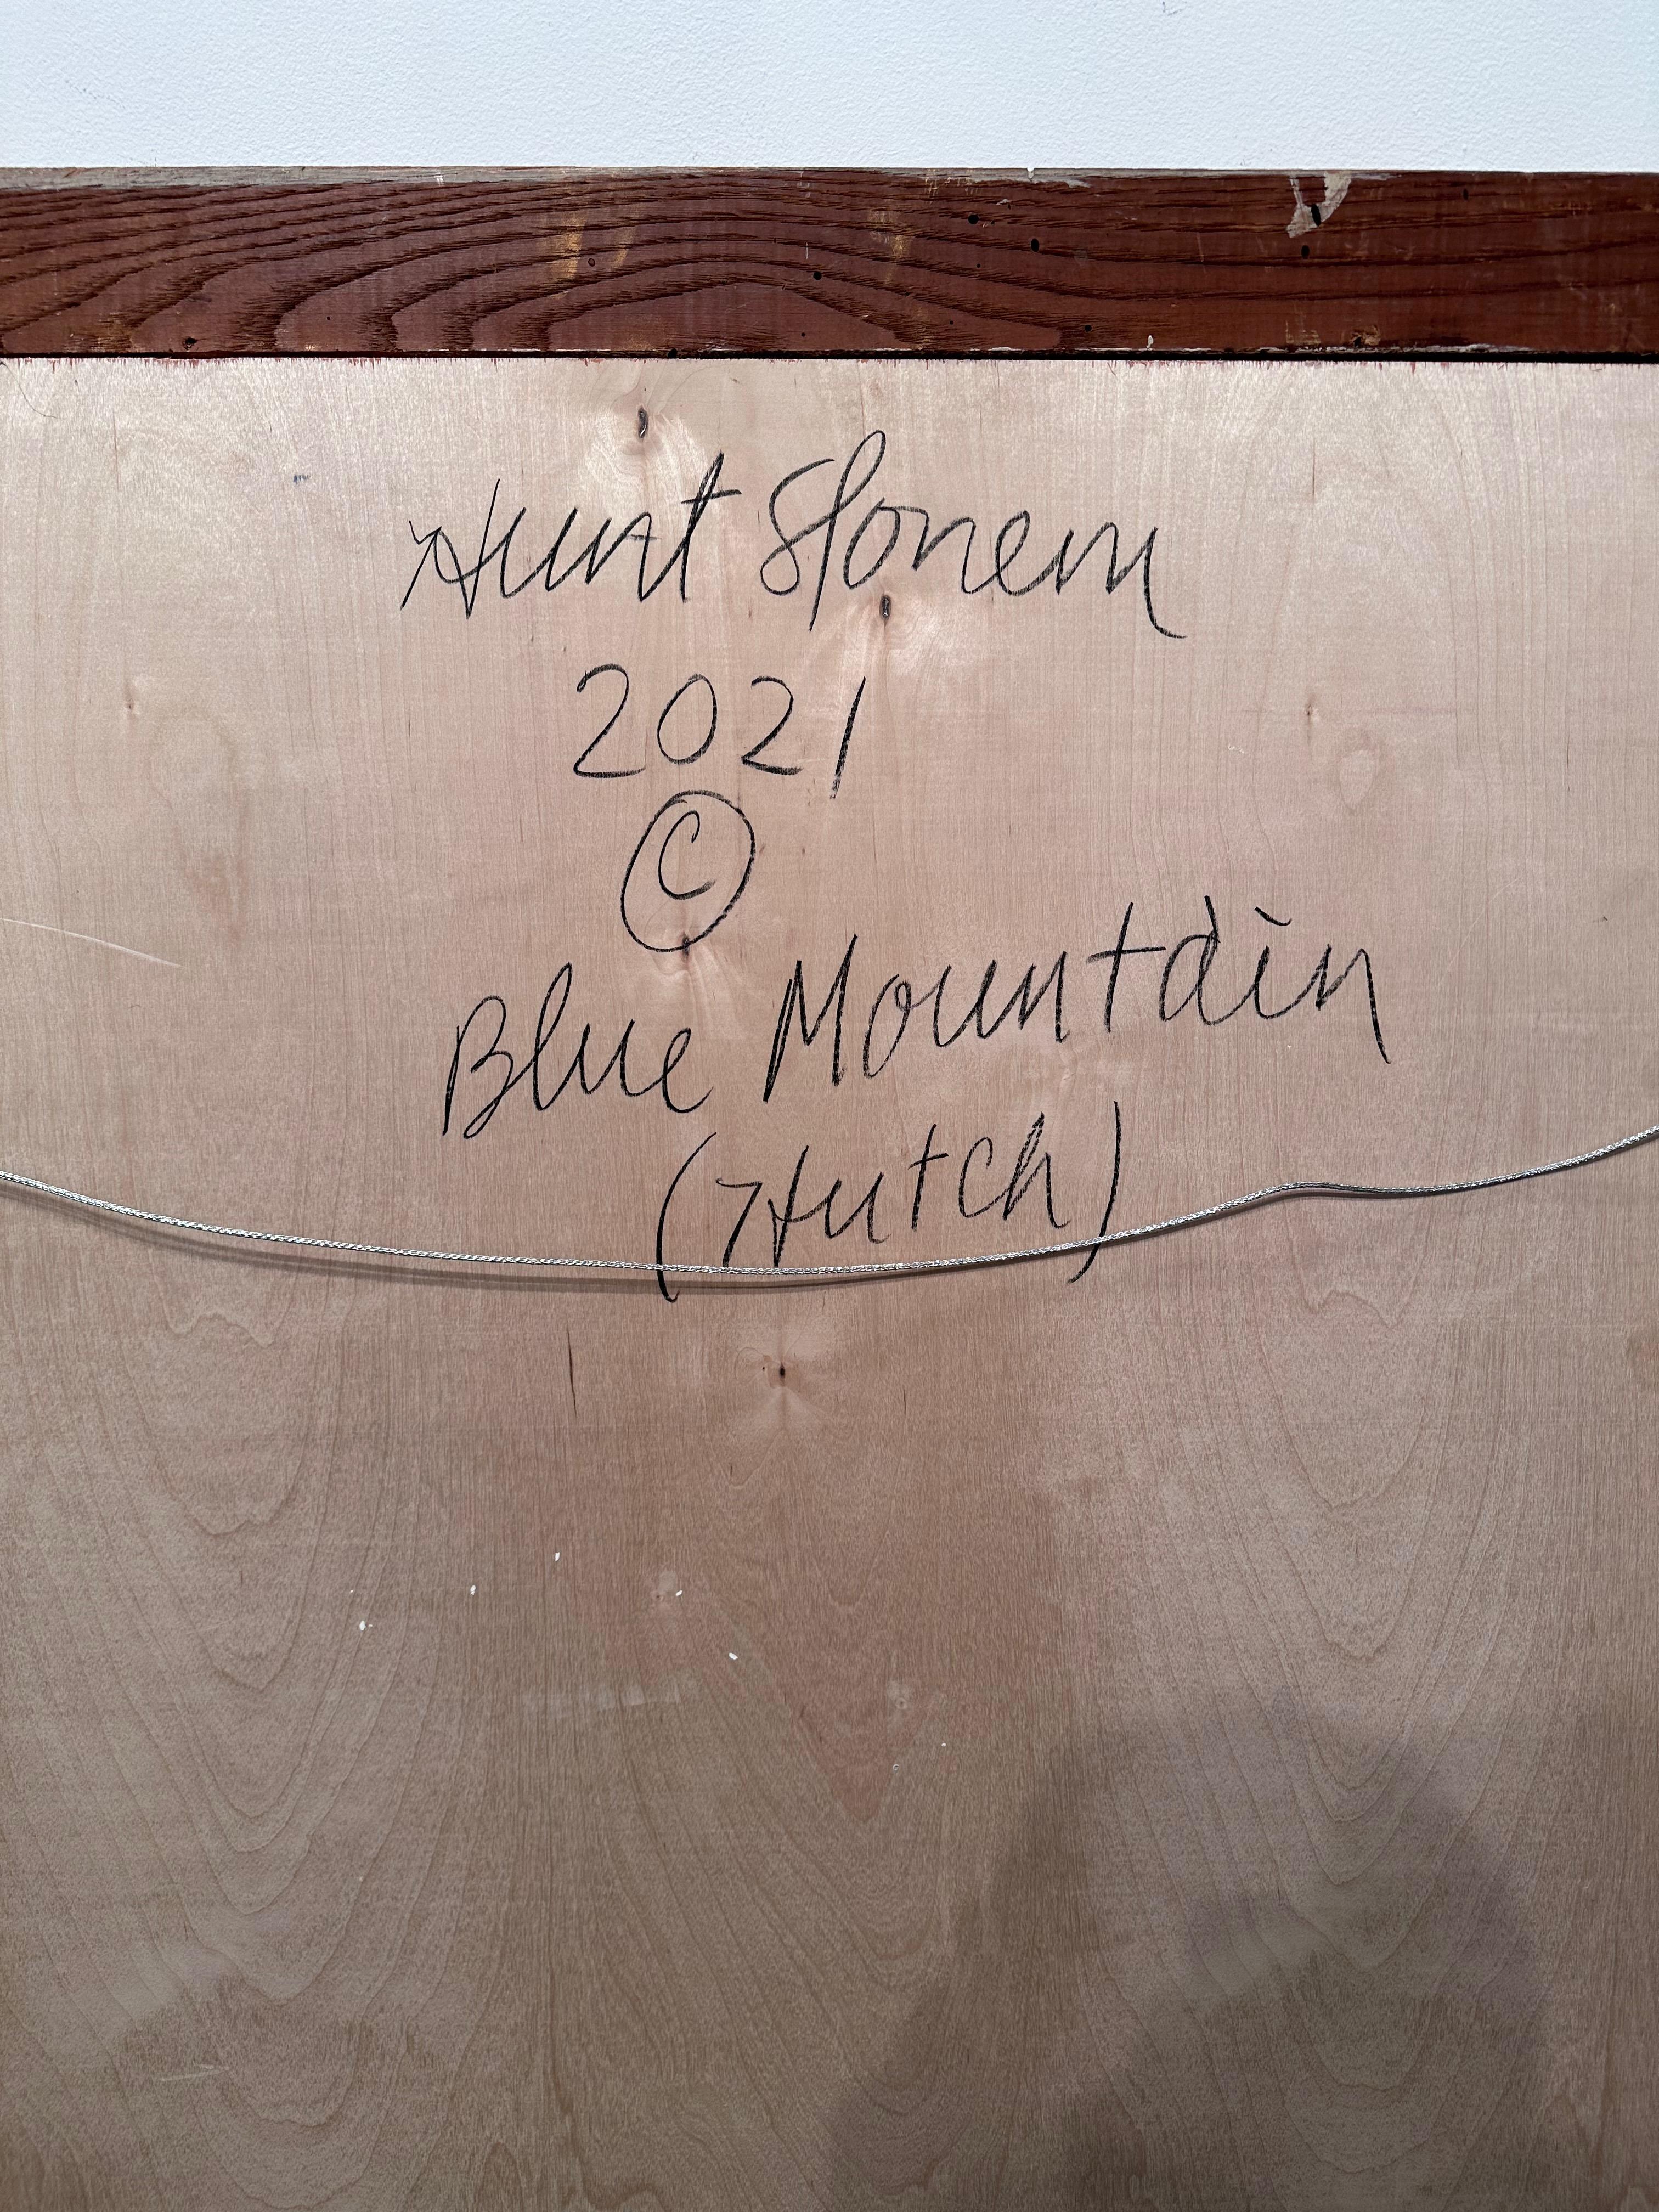 Blue Mountain (Hutch) 1